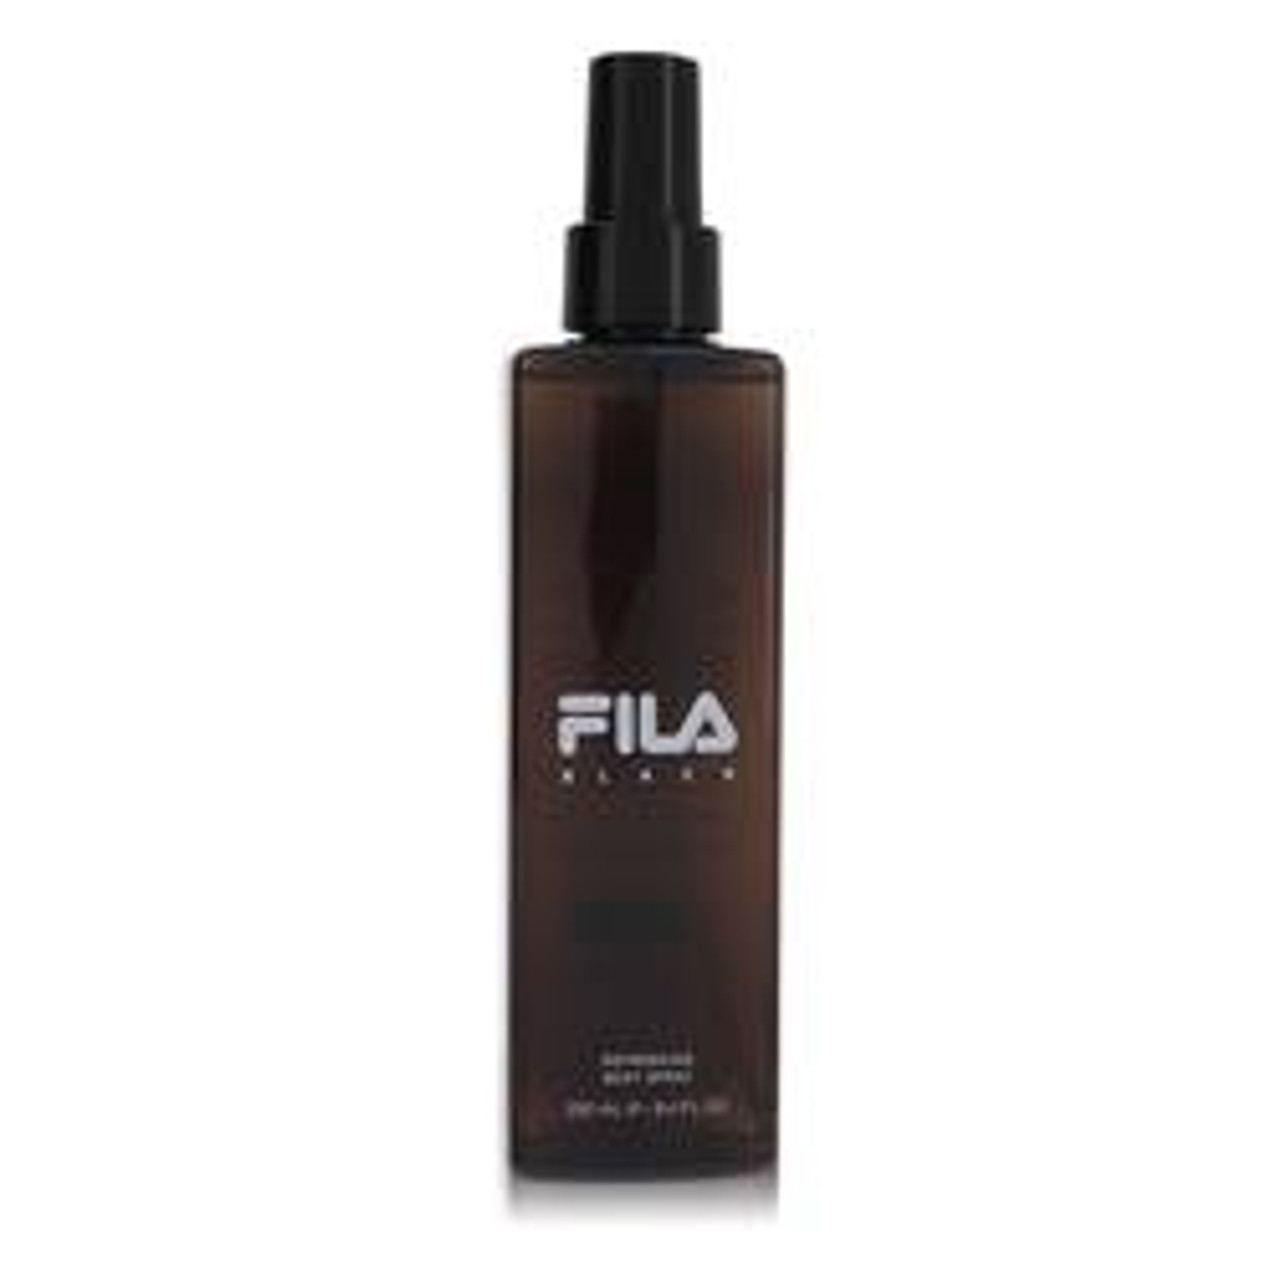 Fila Black Cologne By Fila Body Spray 8.4 oz for Men - [From 23.00 - Choose pk Qty ] - *Ships from Miami